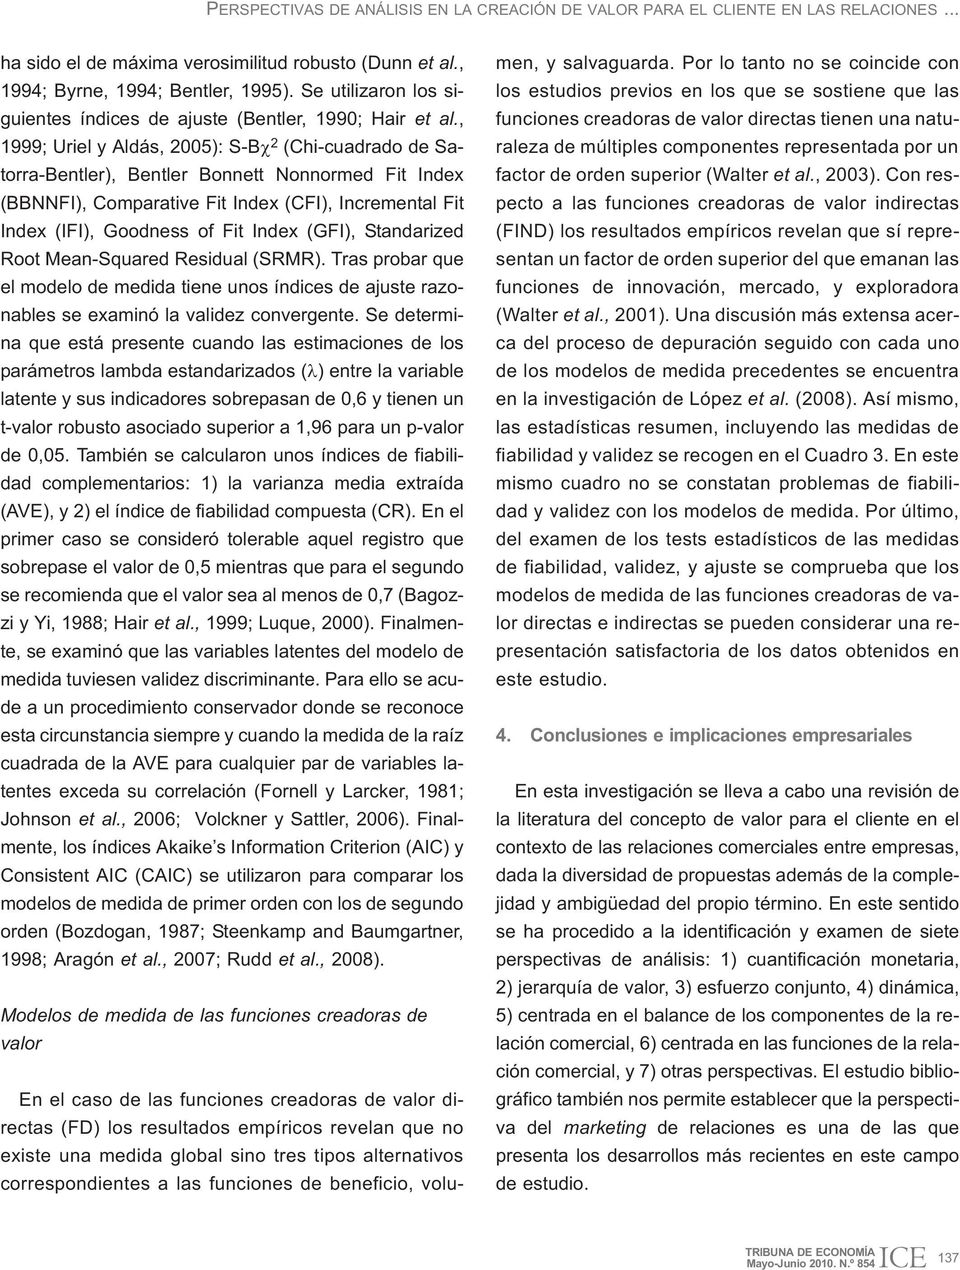 , 1999; Uriel y Aldás, 2005): S-B 2 (Chi-cuadrado de Satorra-Bentler), Bentler Bonnett Nonnormed Fit Index (BBNNFI), Comparative Fit Index (CFI), Incremental Fit Index (IFI), Goodness of Fit Index